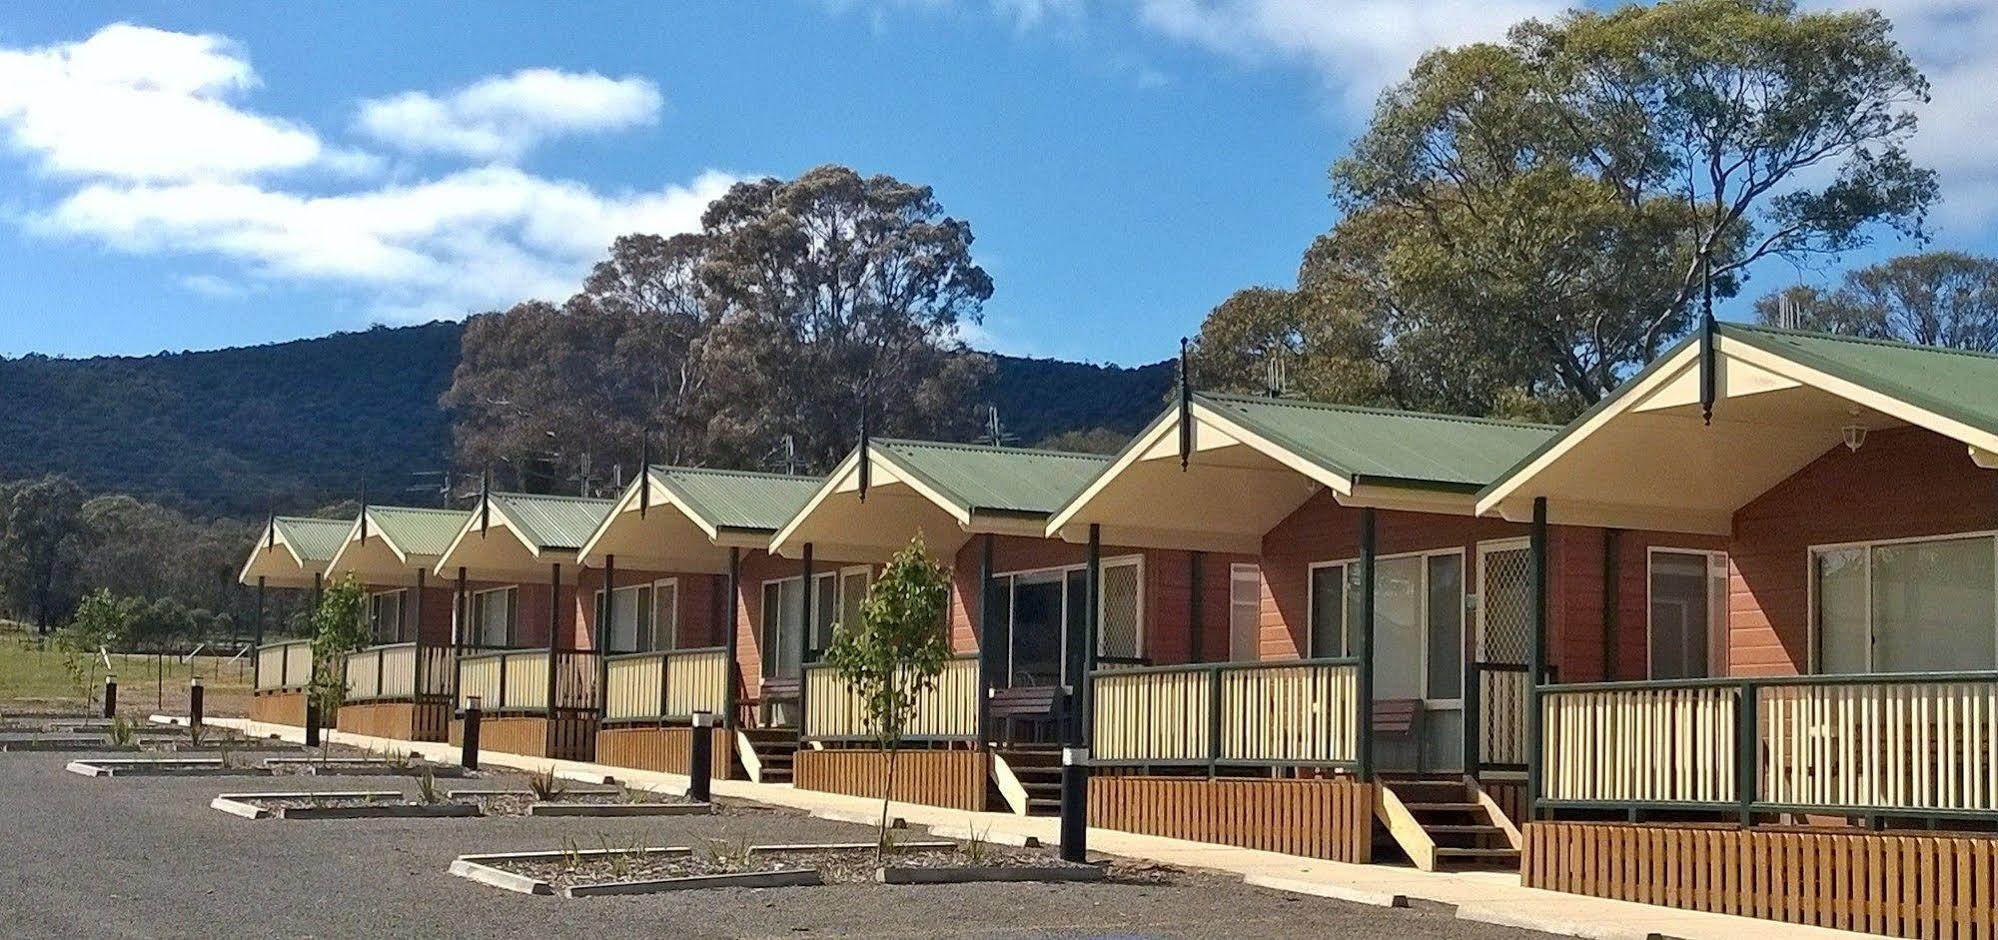 Canberra Carotel Motel Exteriér fotografie